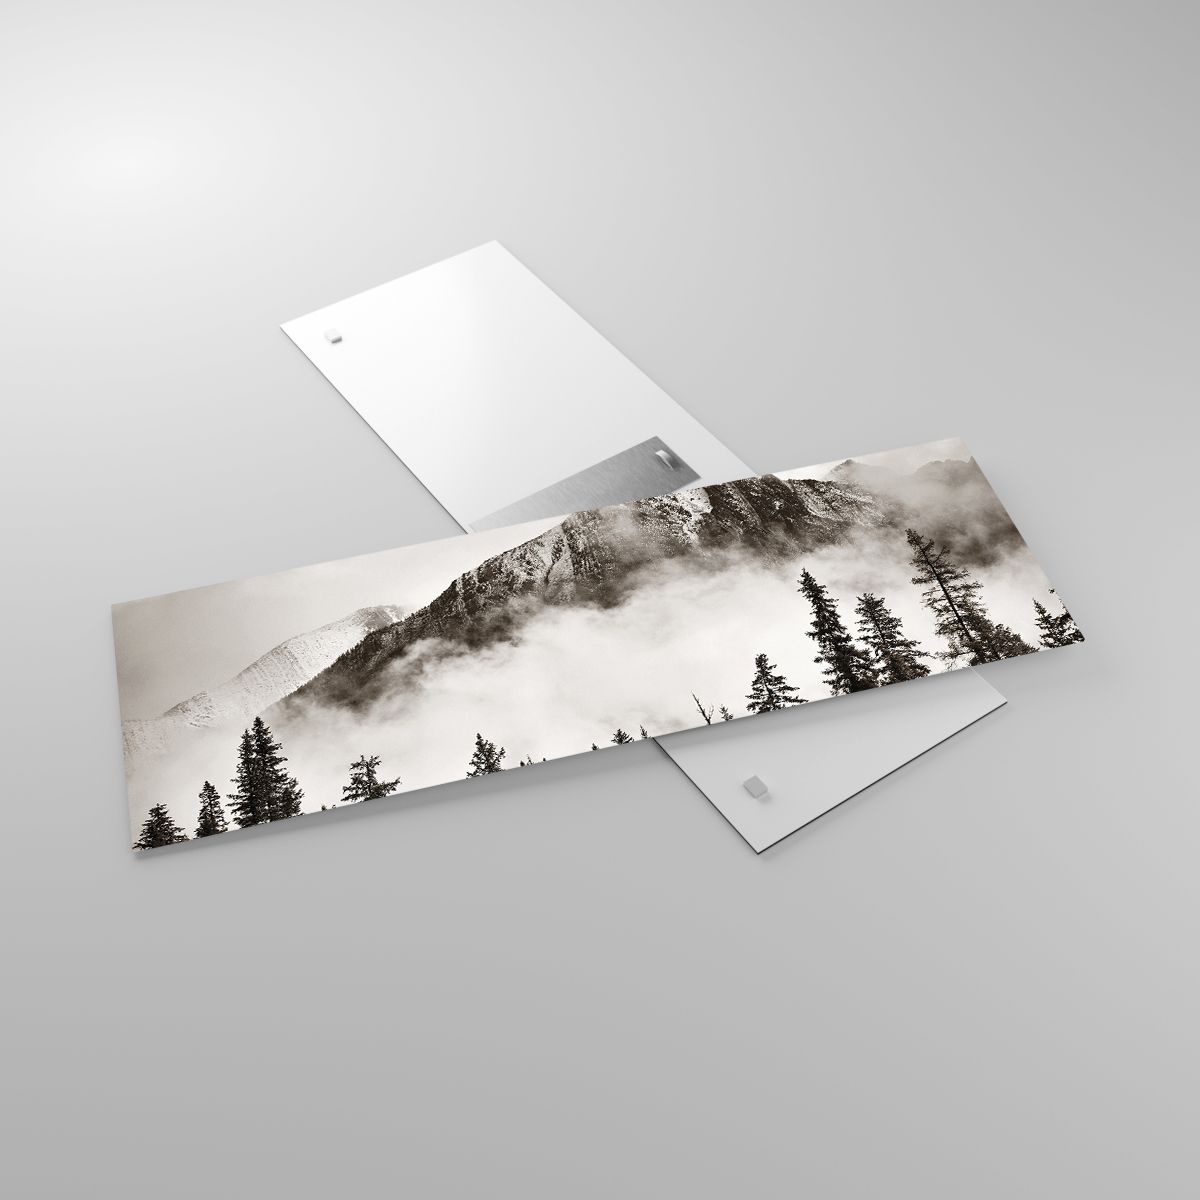 Glasbild Landschaft, Glasbild Berge, Glasbild Wald, Glasbild Berggipfel, Glasbild Sepia